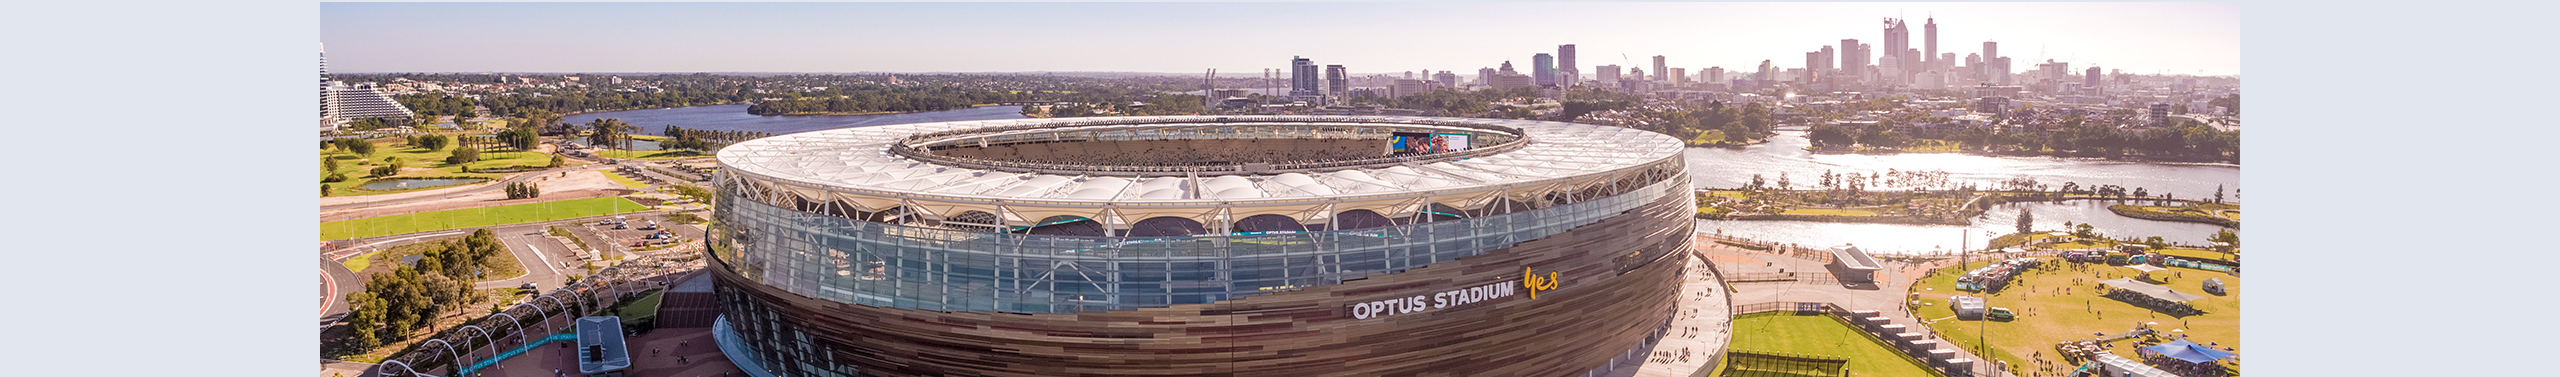 Optus Stadium Project